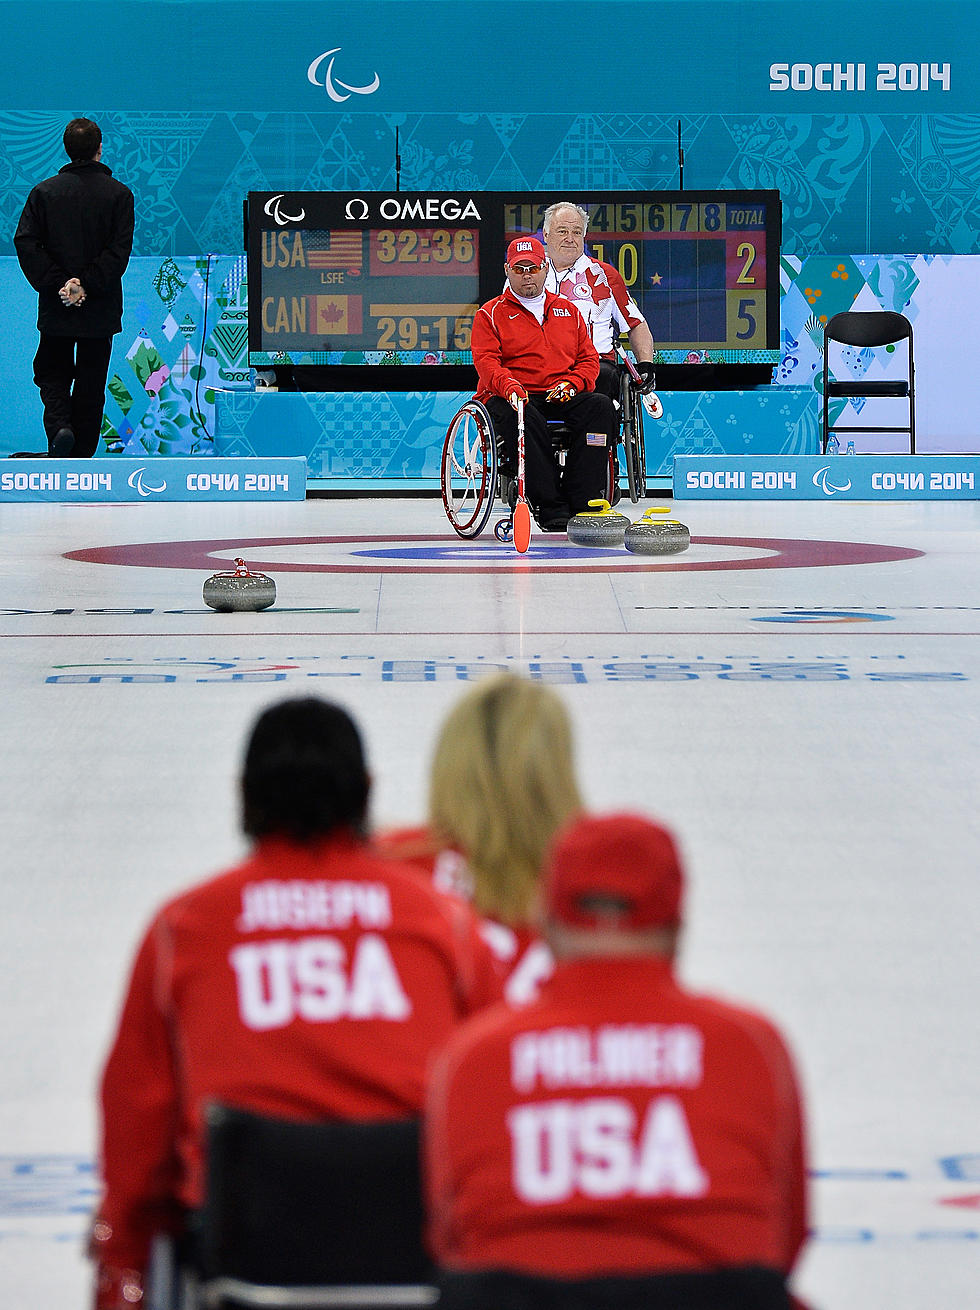 US Curling Medal Hopes Fade